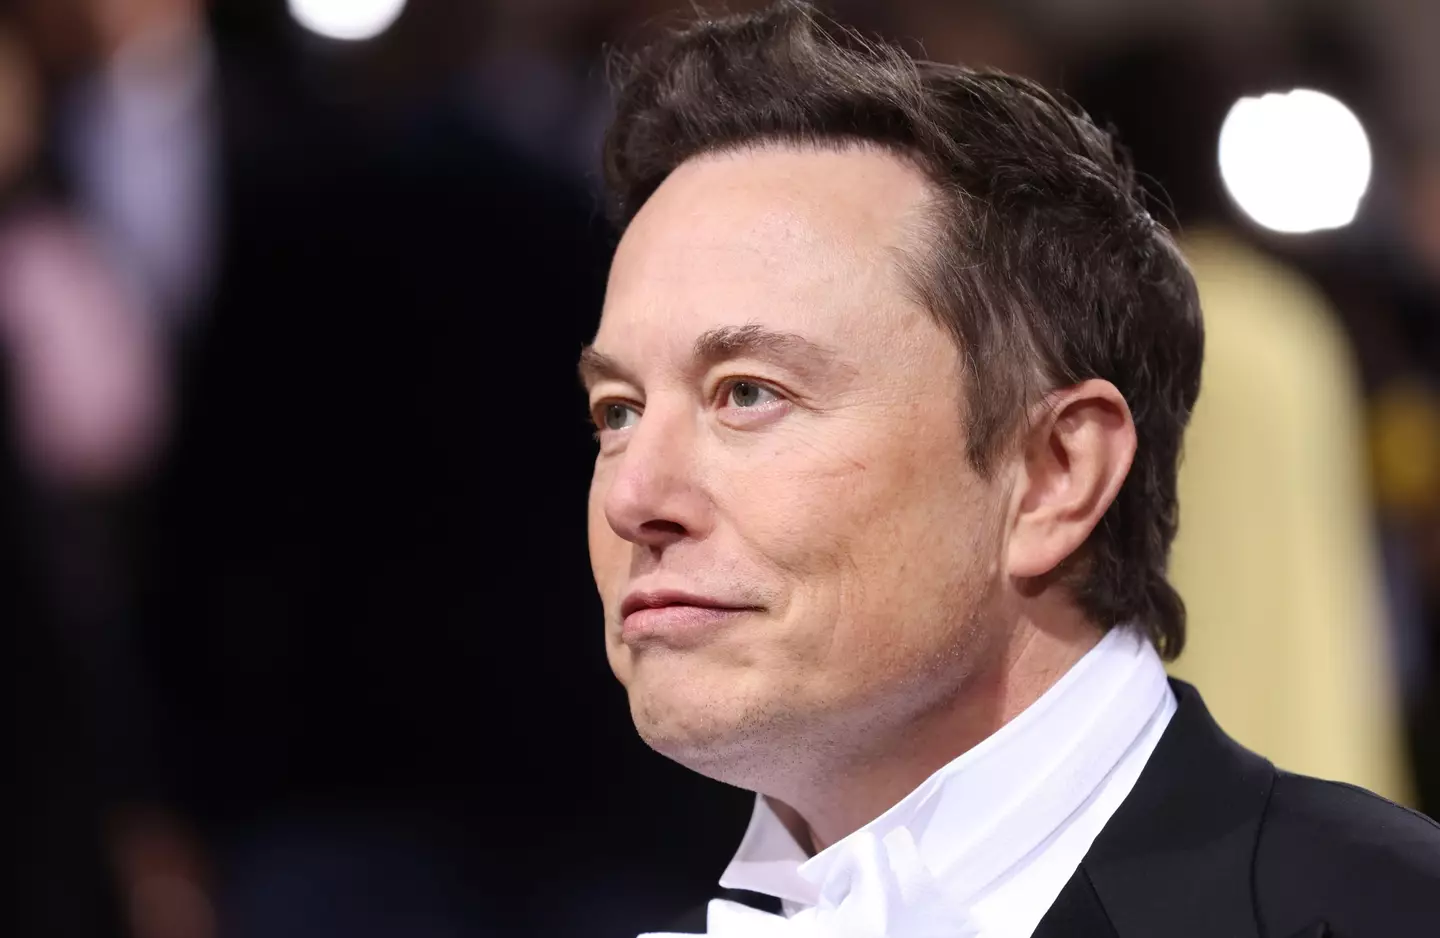 Elon Musk revealed he has Asperger's in 2021.